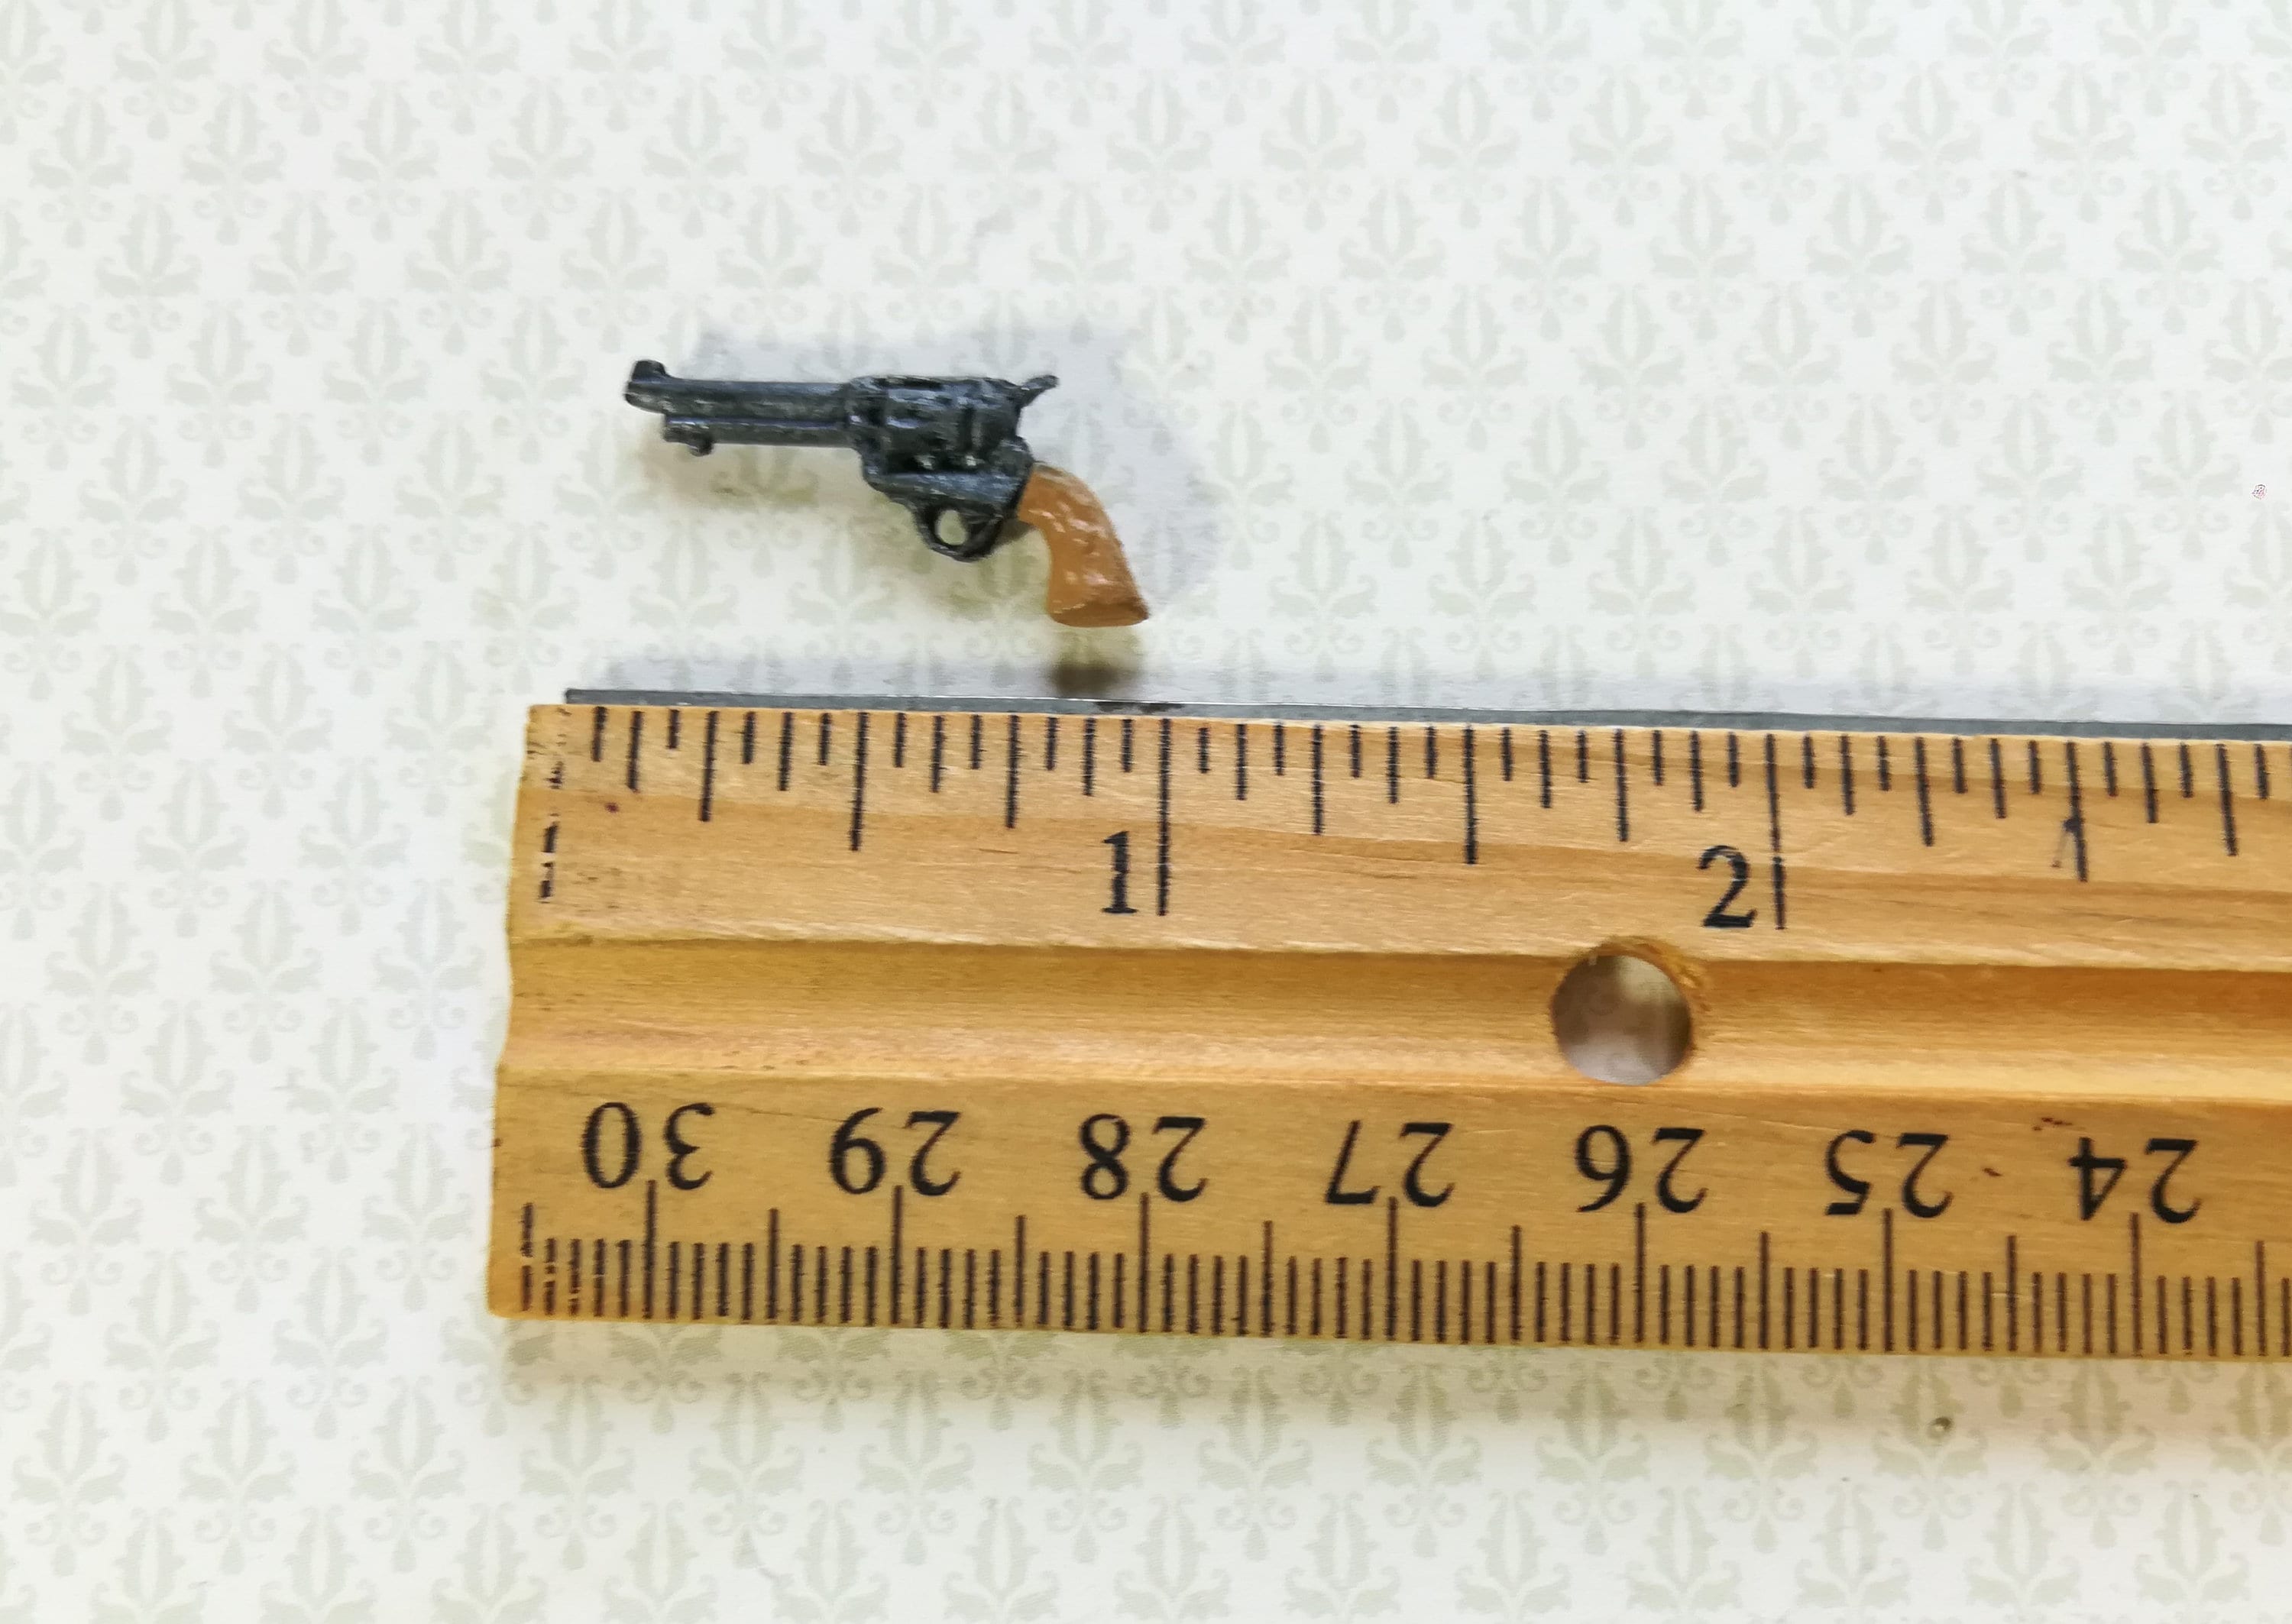 Navy Colt Handgun Pistol 1/12 scale cast metal dollhouse miniature ISL1203 